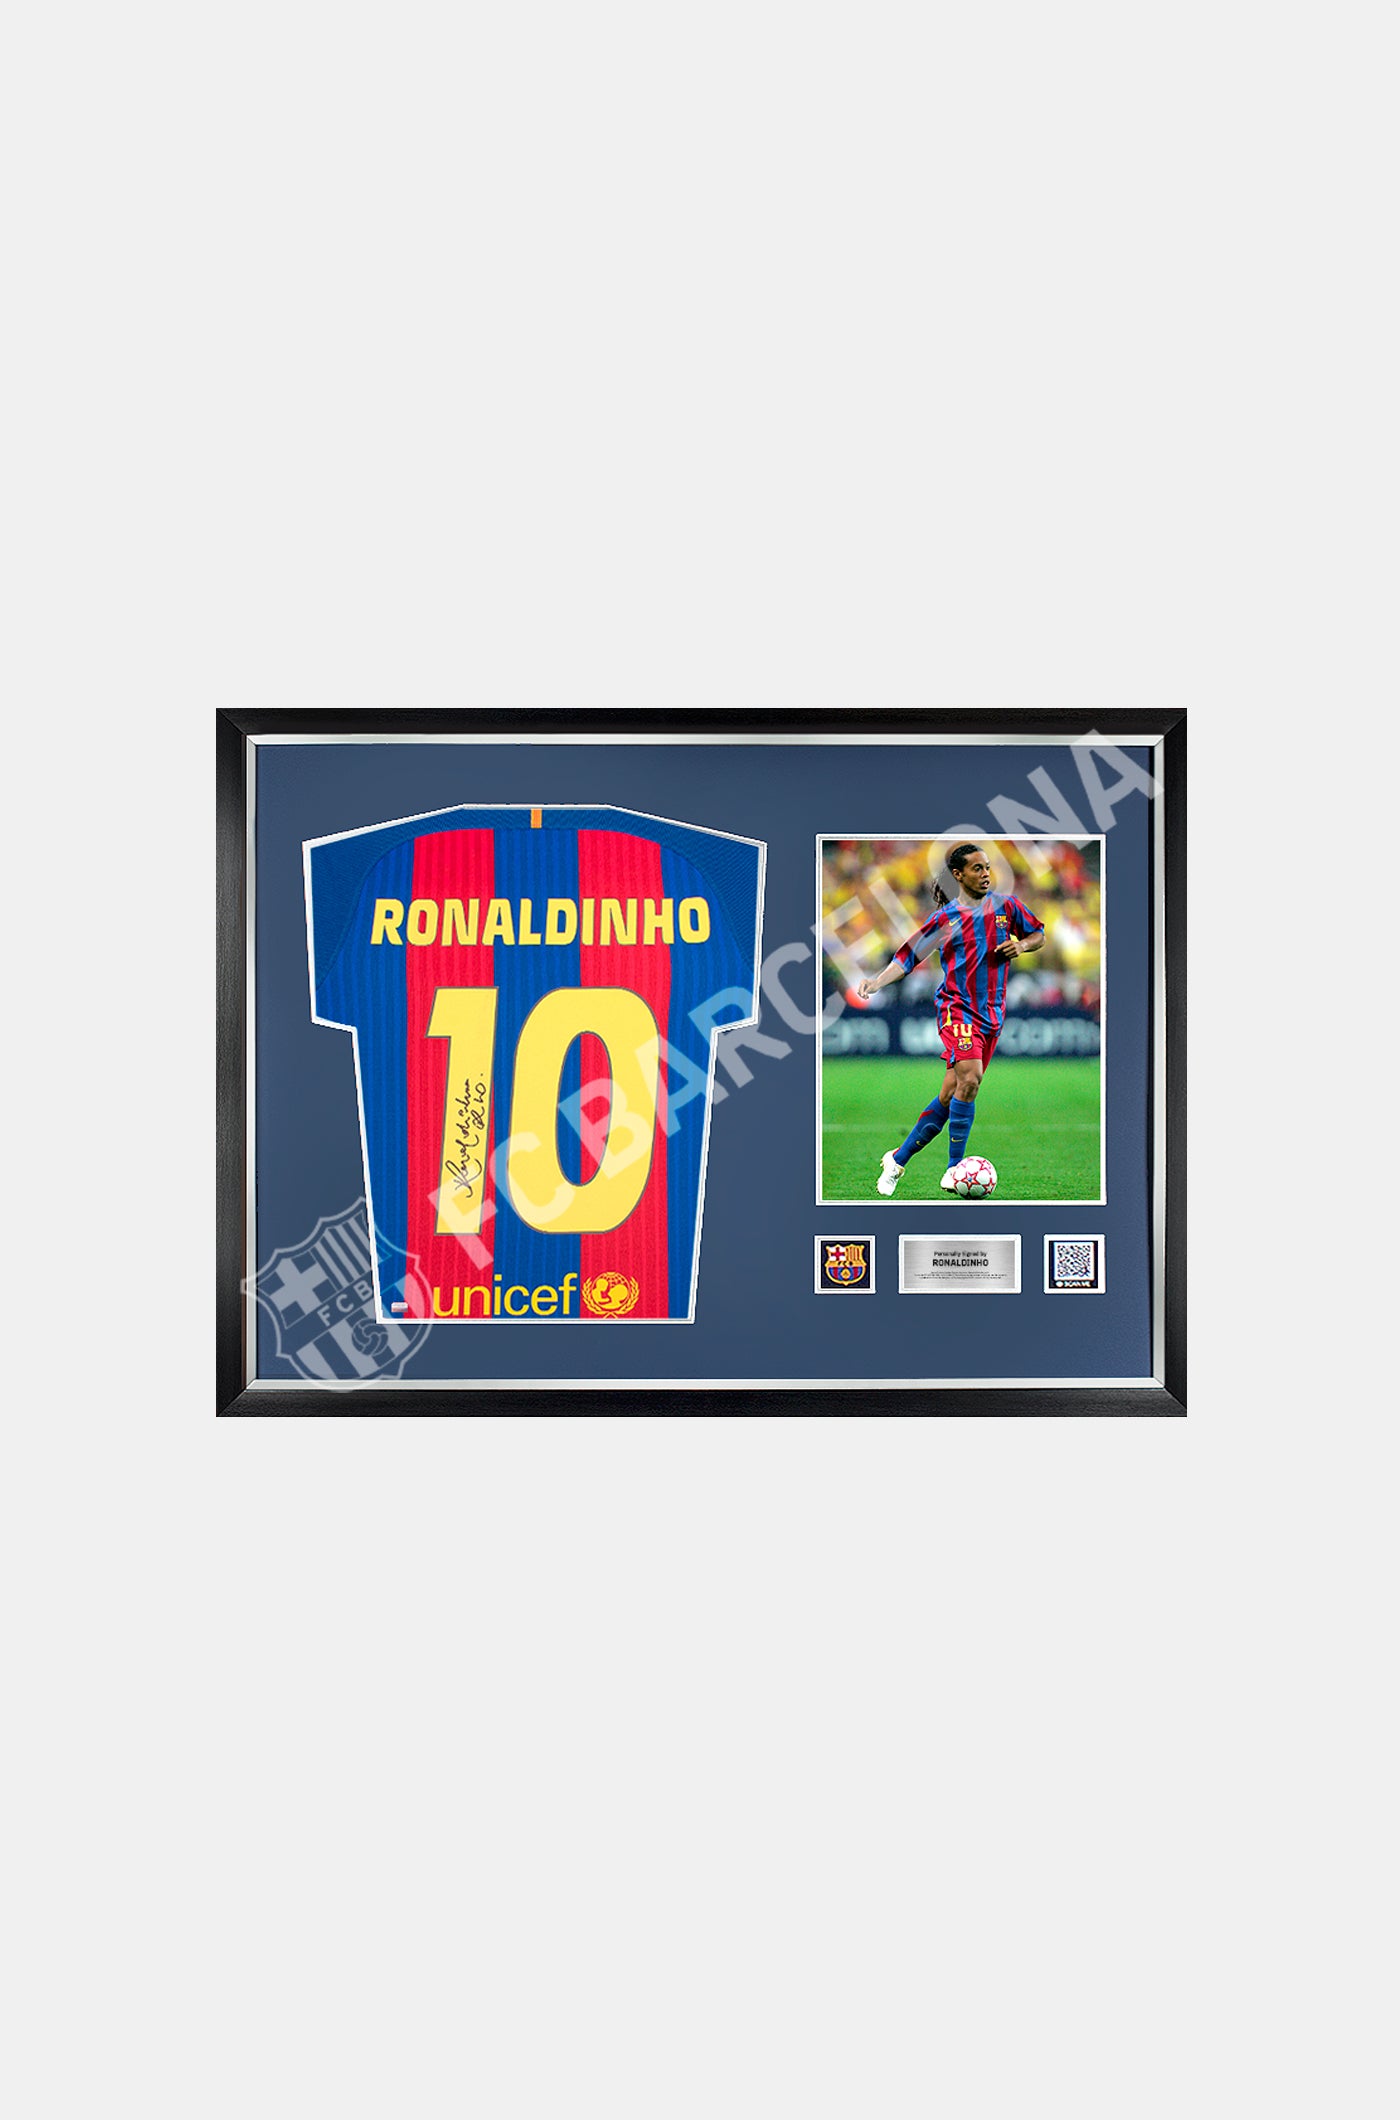 RONALDINHO | Camiseta oficial del FC Barcelona 2016-17 firmada y enmarcada por Ronaldinho 